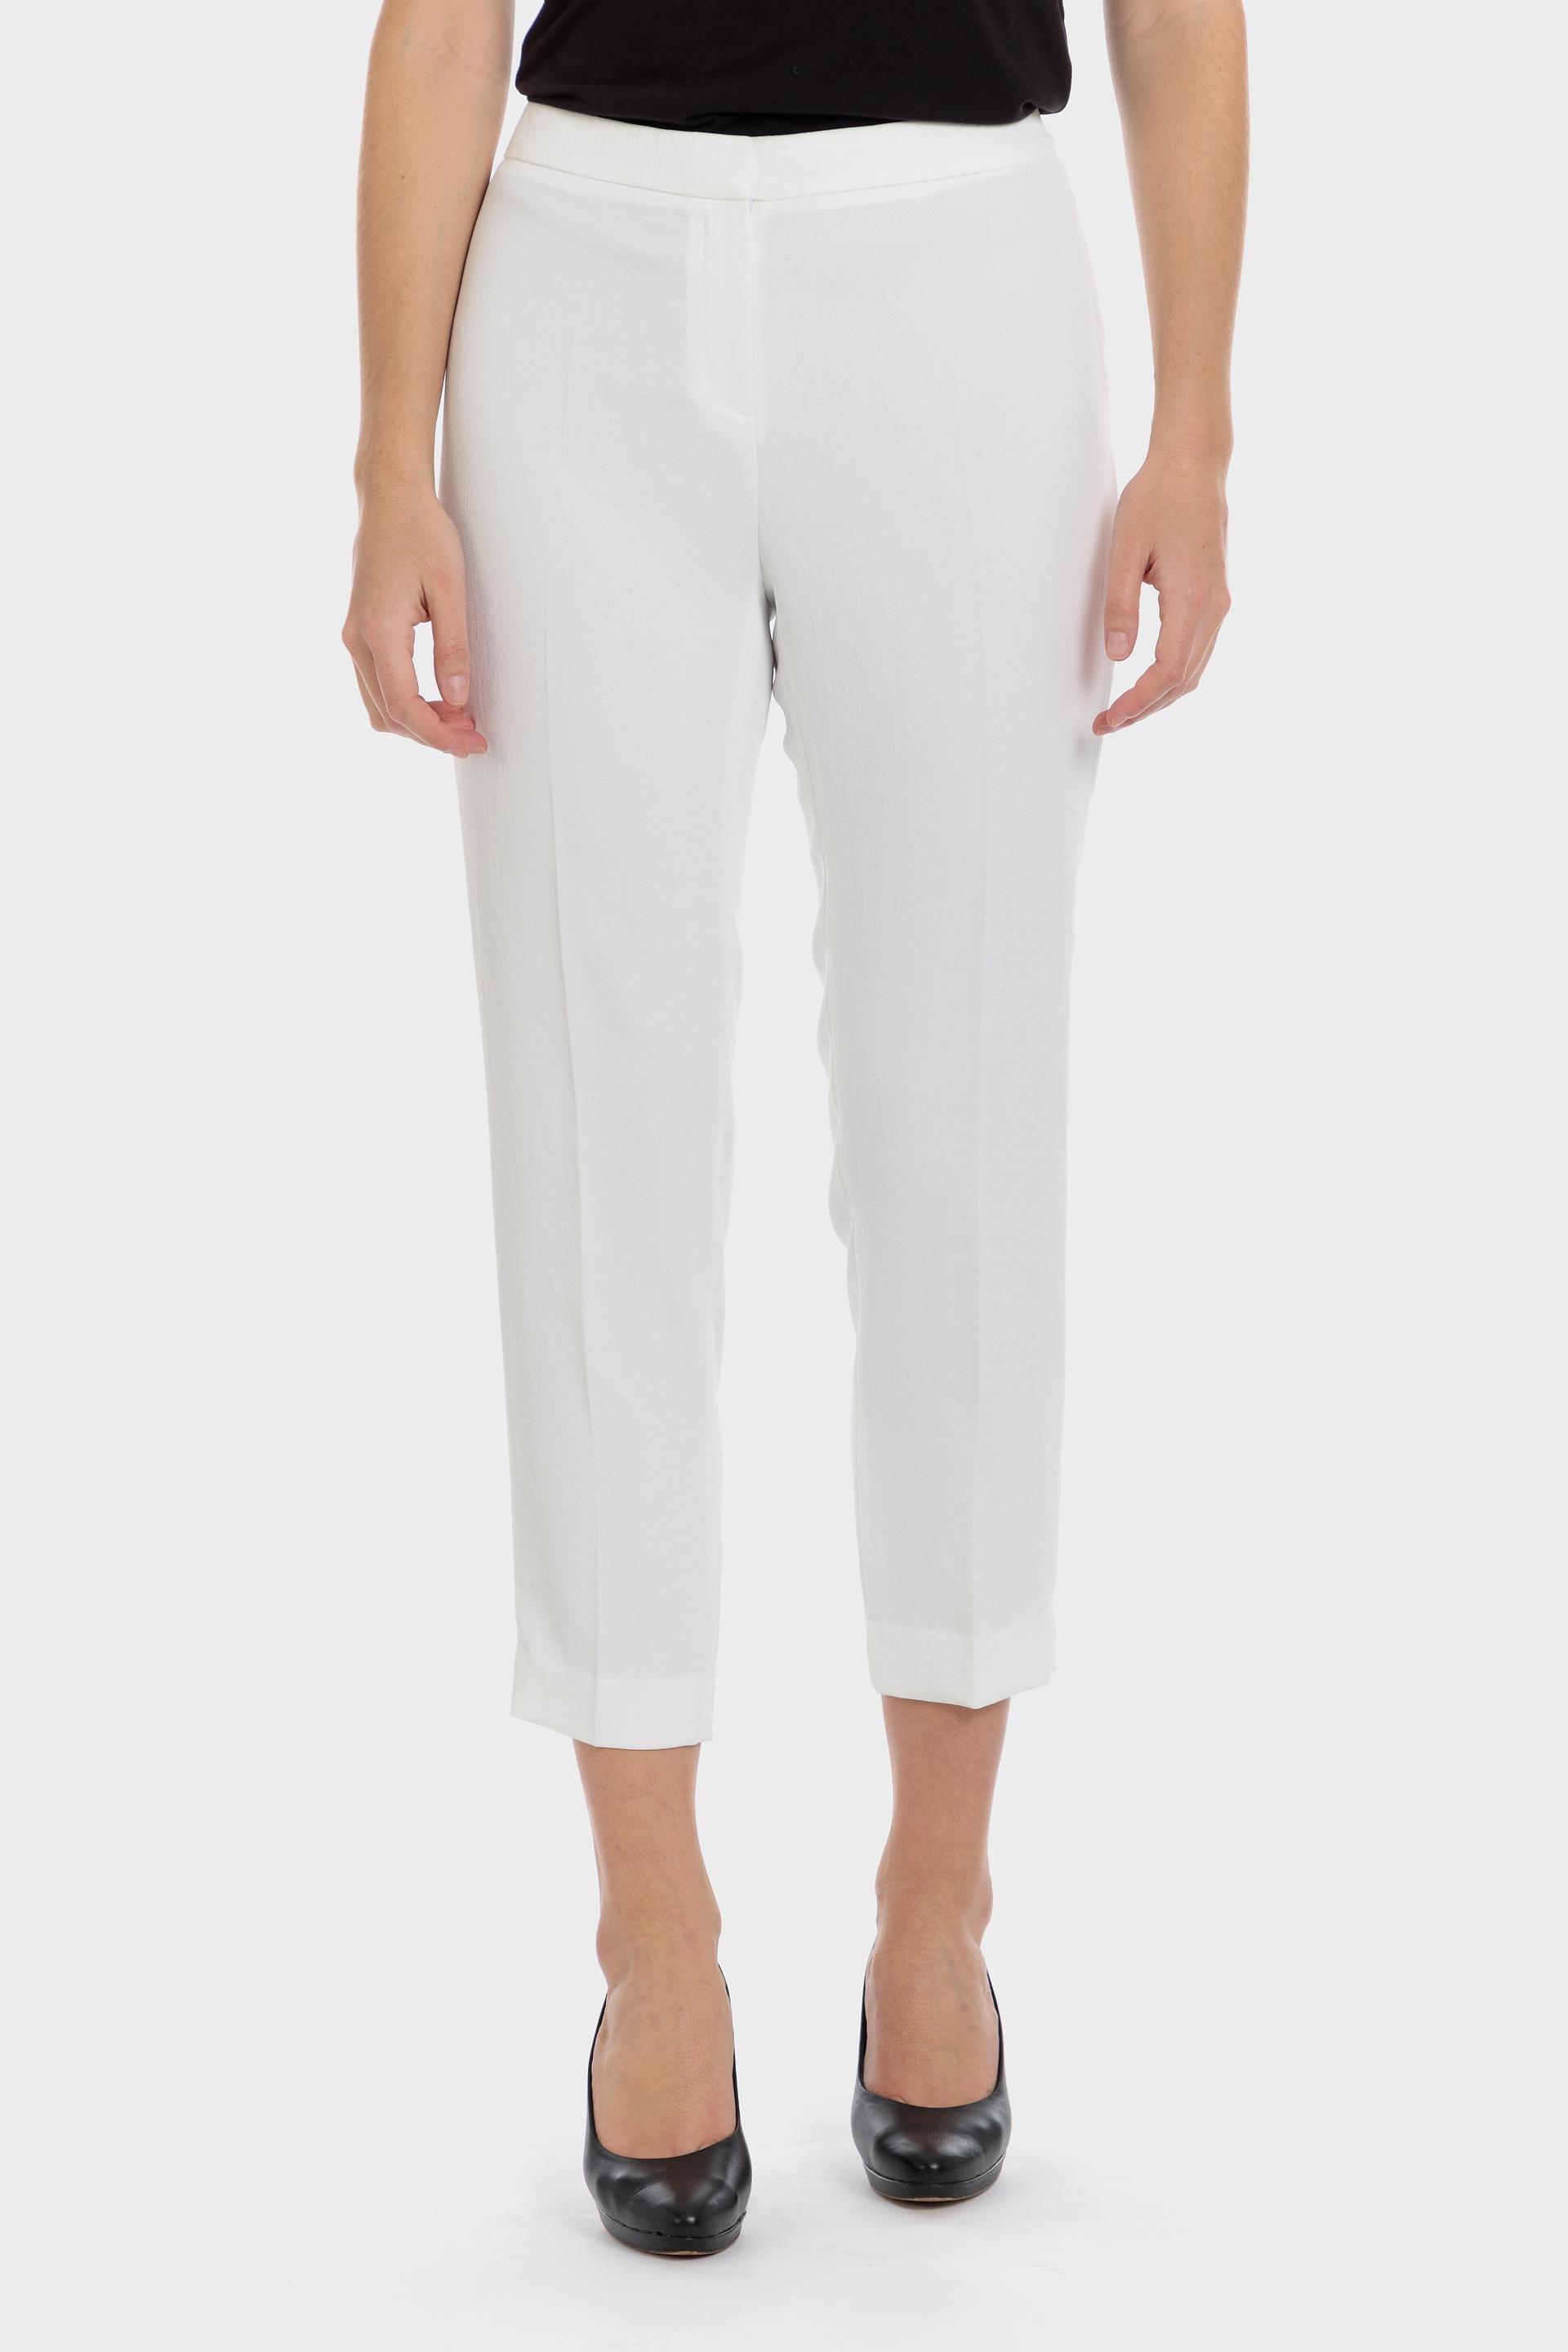 Punt Roma - White Japonese Fabric Capri Trousers